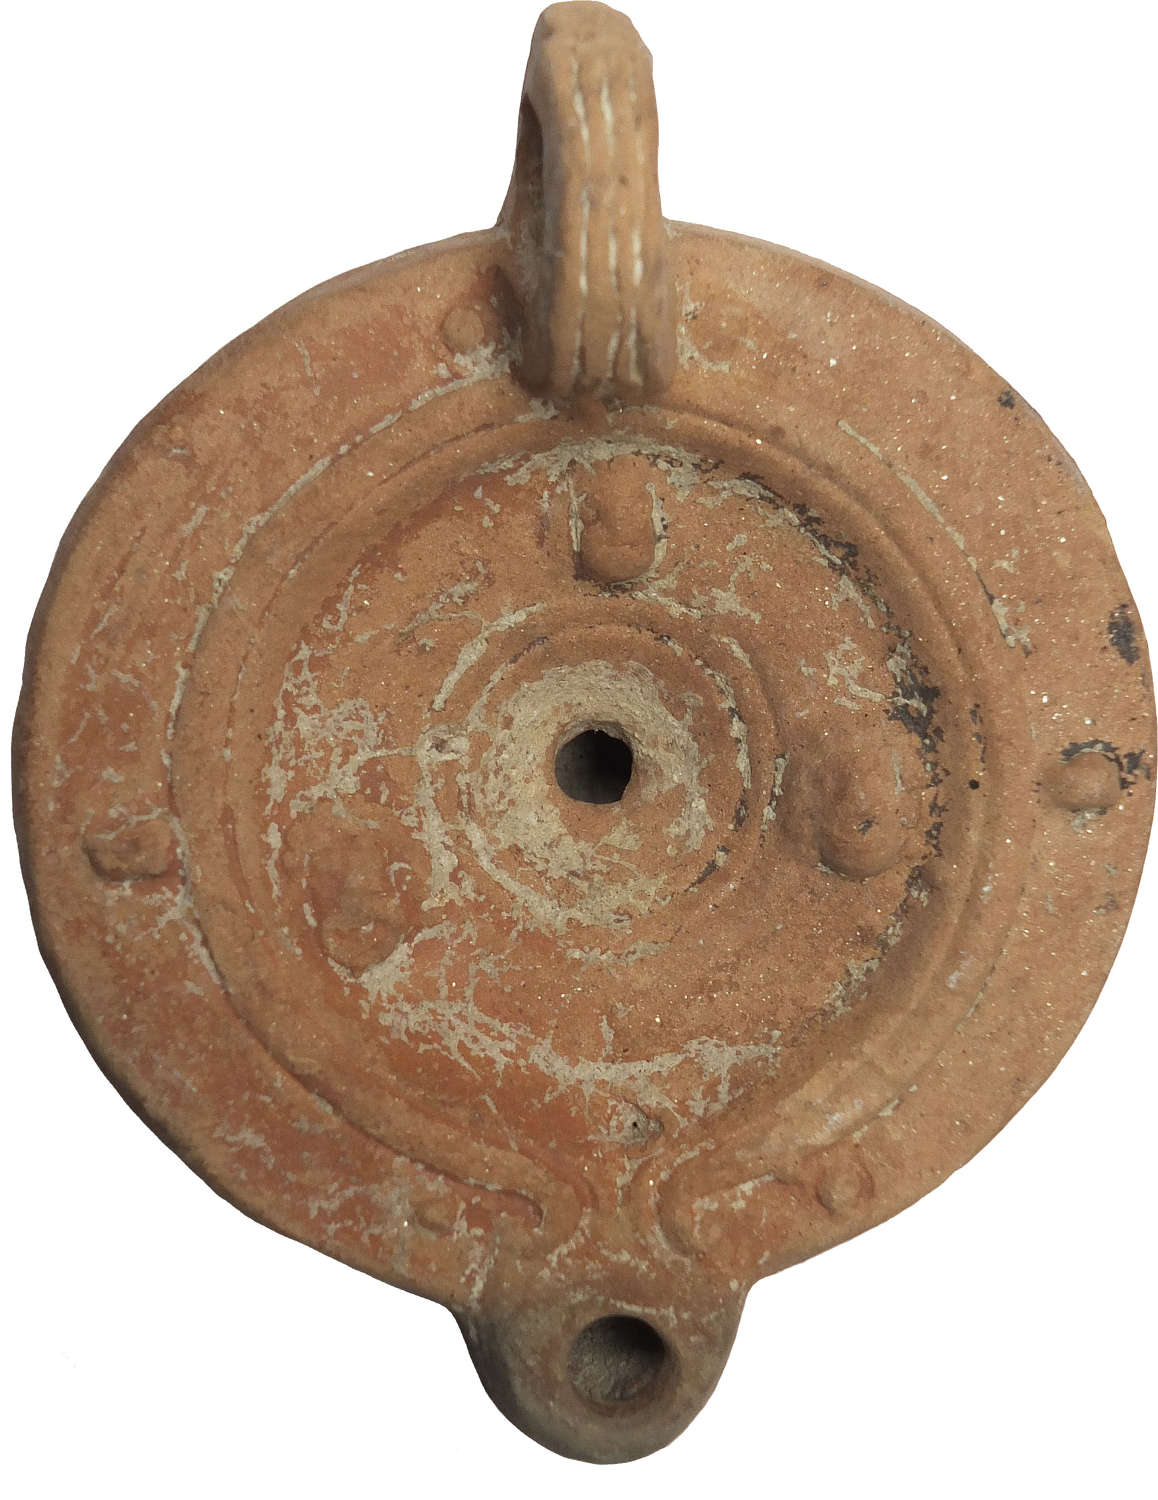 A Roman pottery oil lamp, c. 90-130 A.D.